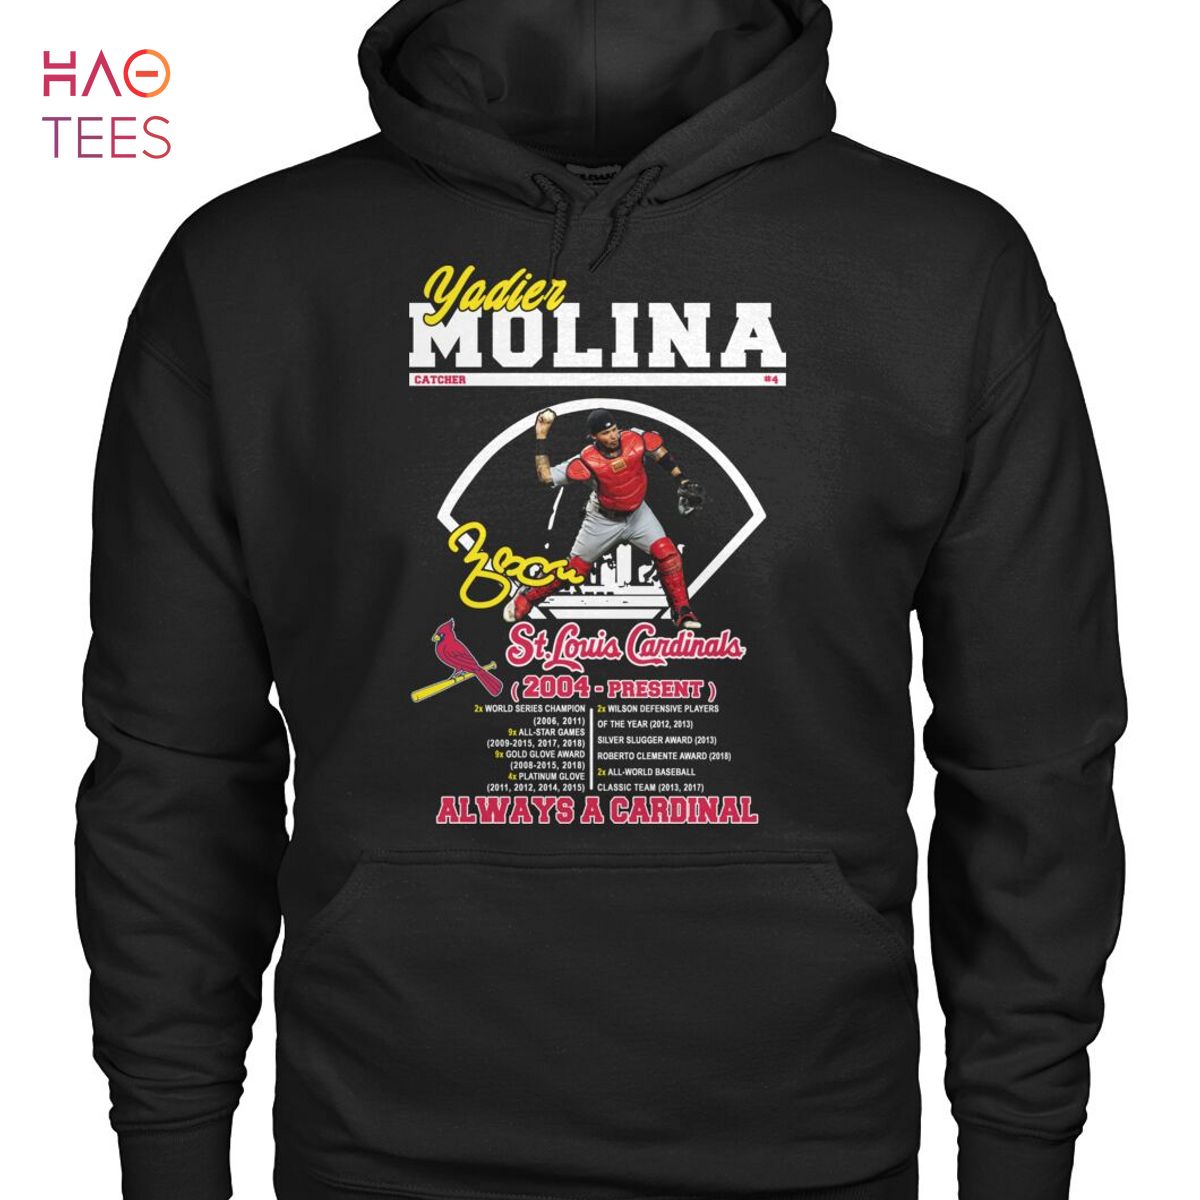 Official Yadier Molina Jersey, Yadier Molina Shirts, Baseball Apparel,  Yadier Molina Gear